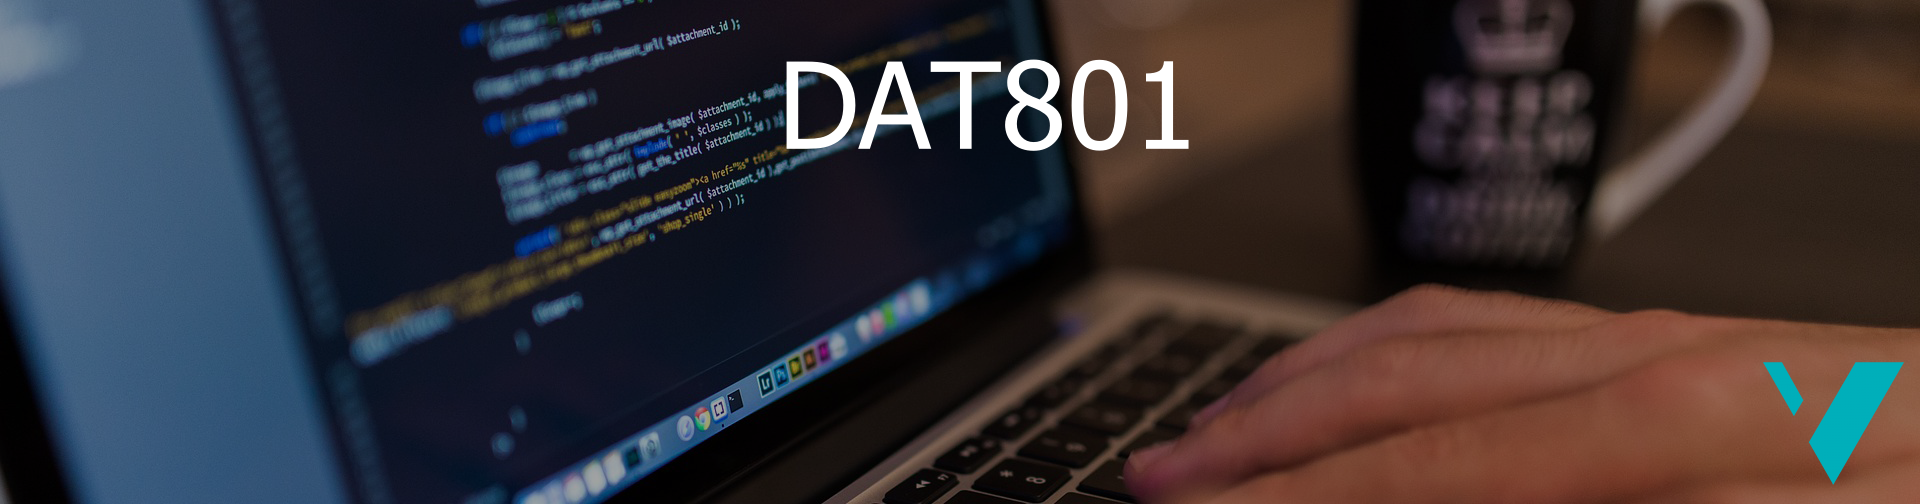 DAT801 logo